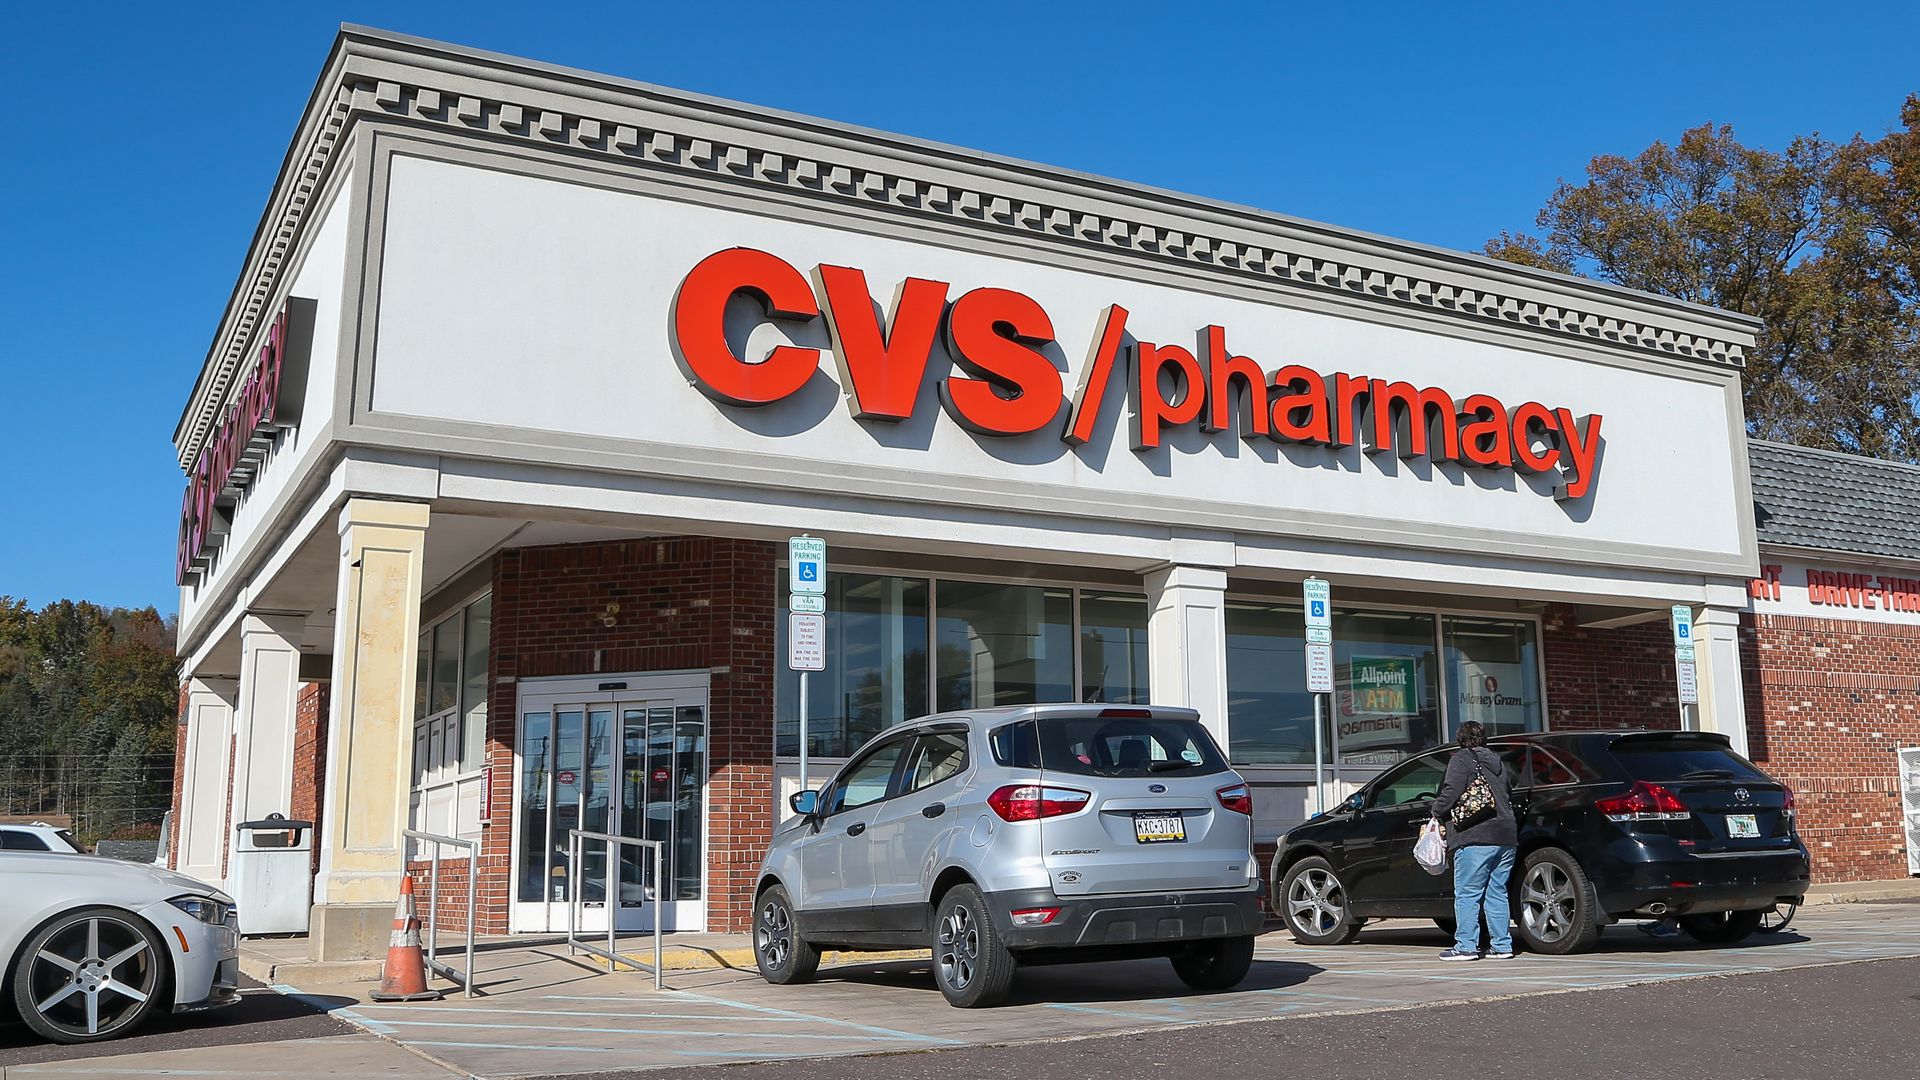 Photo of a CVS/pharmacy storefront